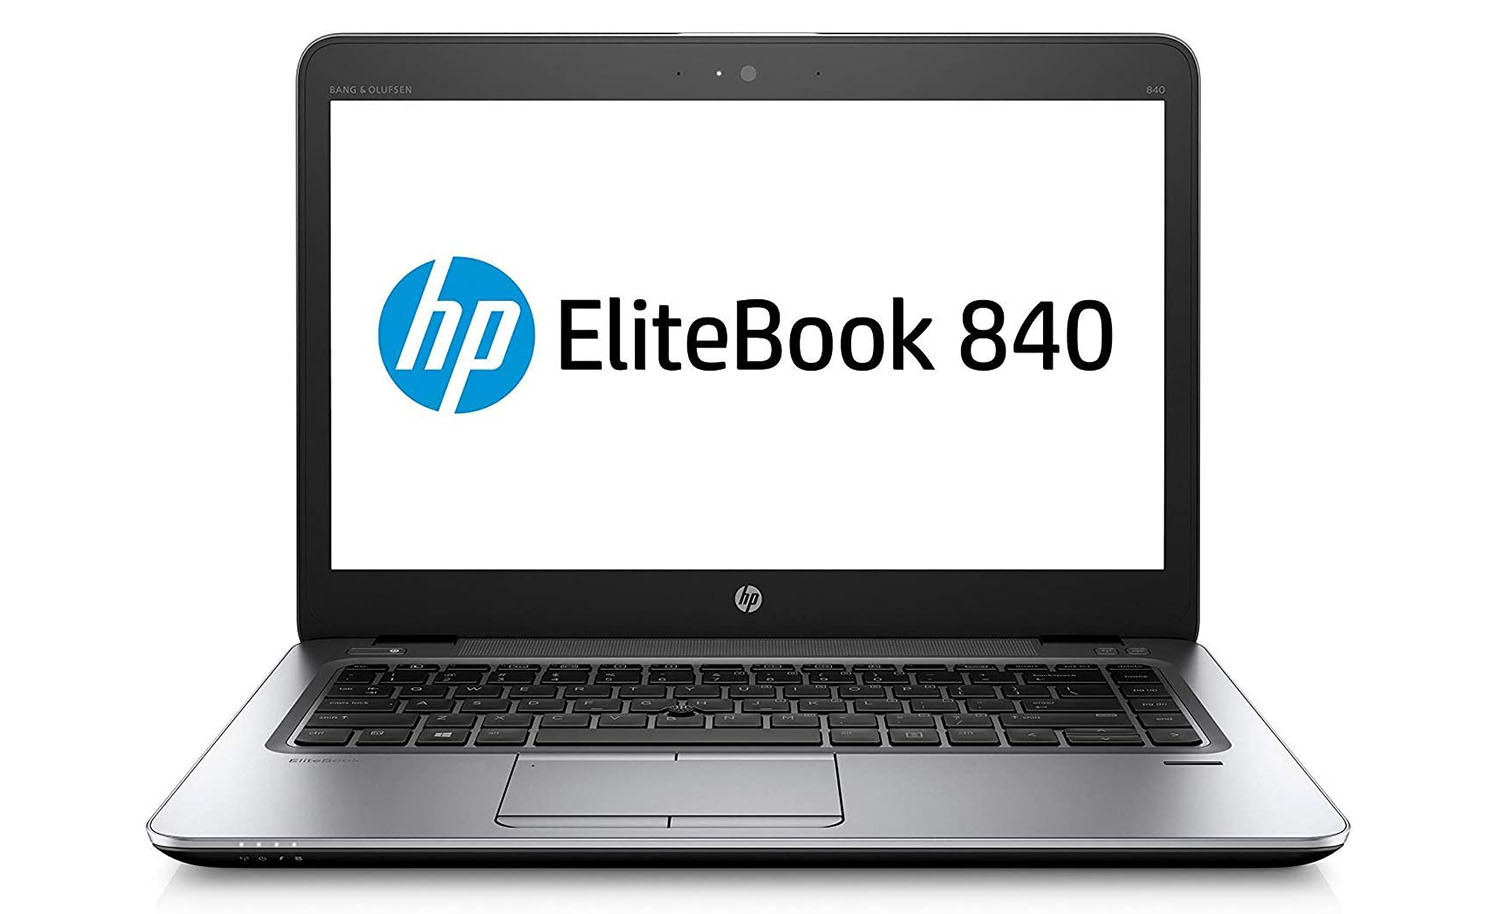 HP EliteBook 840 G4 Intel Core i7 7th Gen 8GB RAM 256GB SSD Microsoft Windows 10 Pro